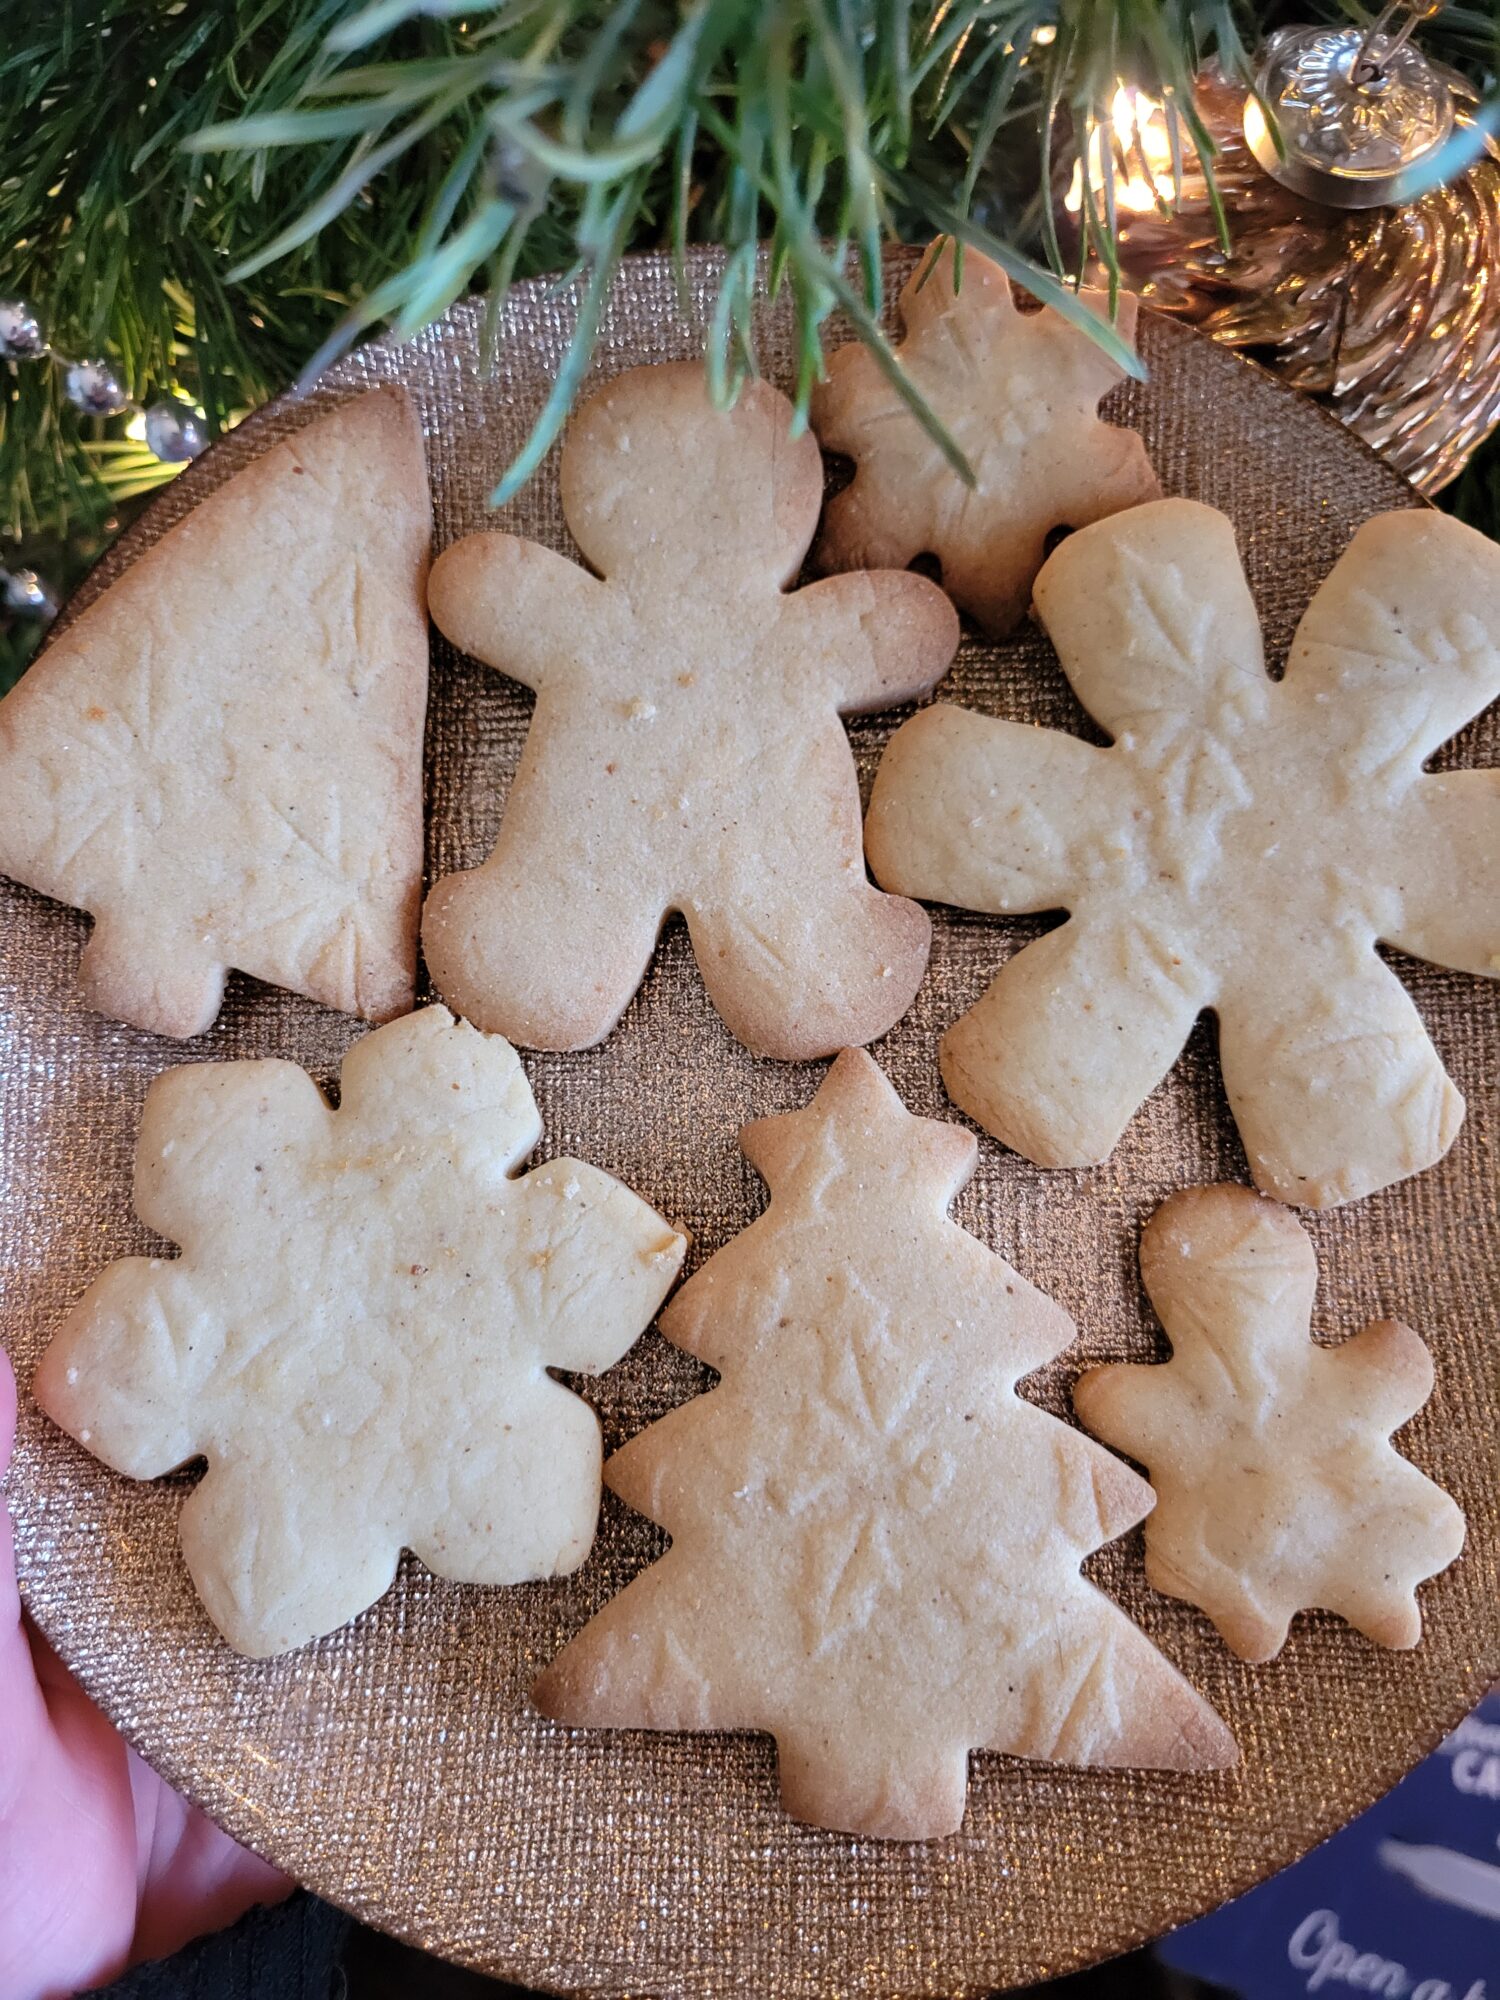 Allways Hungry - Stamped Shortbread Cookies Makes 2 dozen cookies